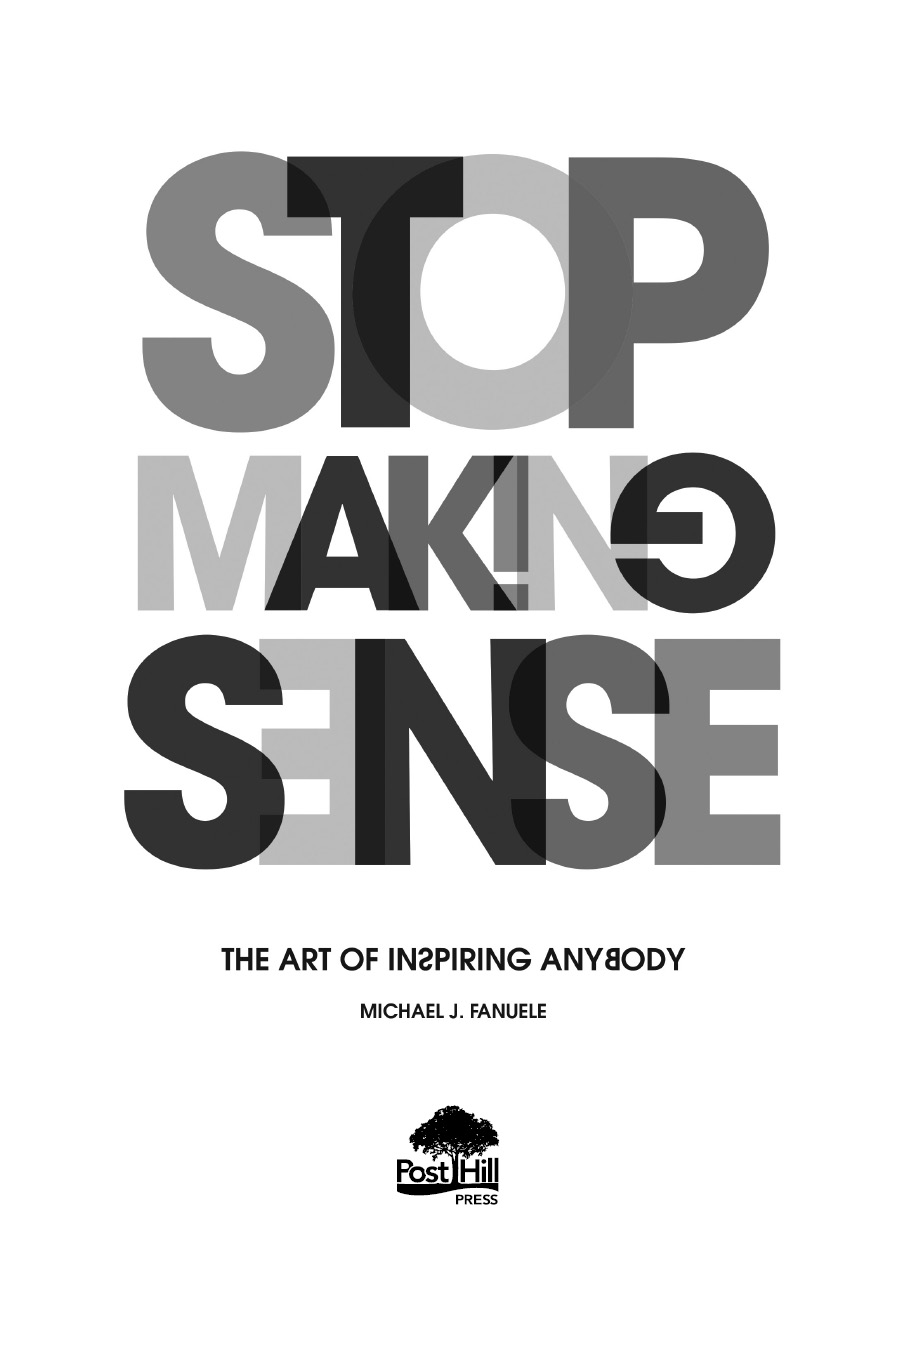 A POST HILL PRESS BOOK Stop Making Sense The Art of Inspiring Anybody - photo 3